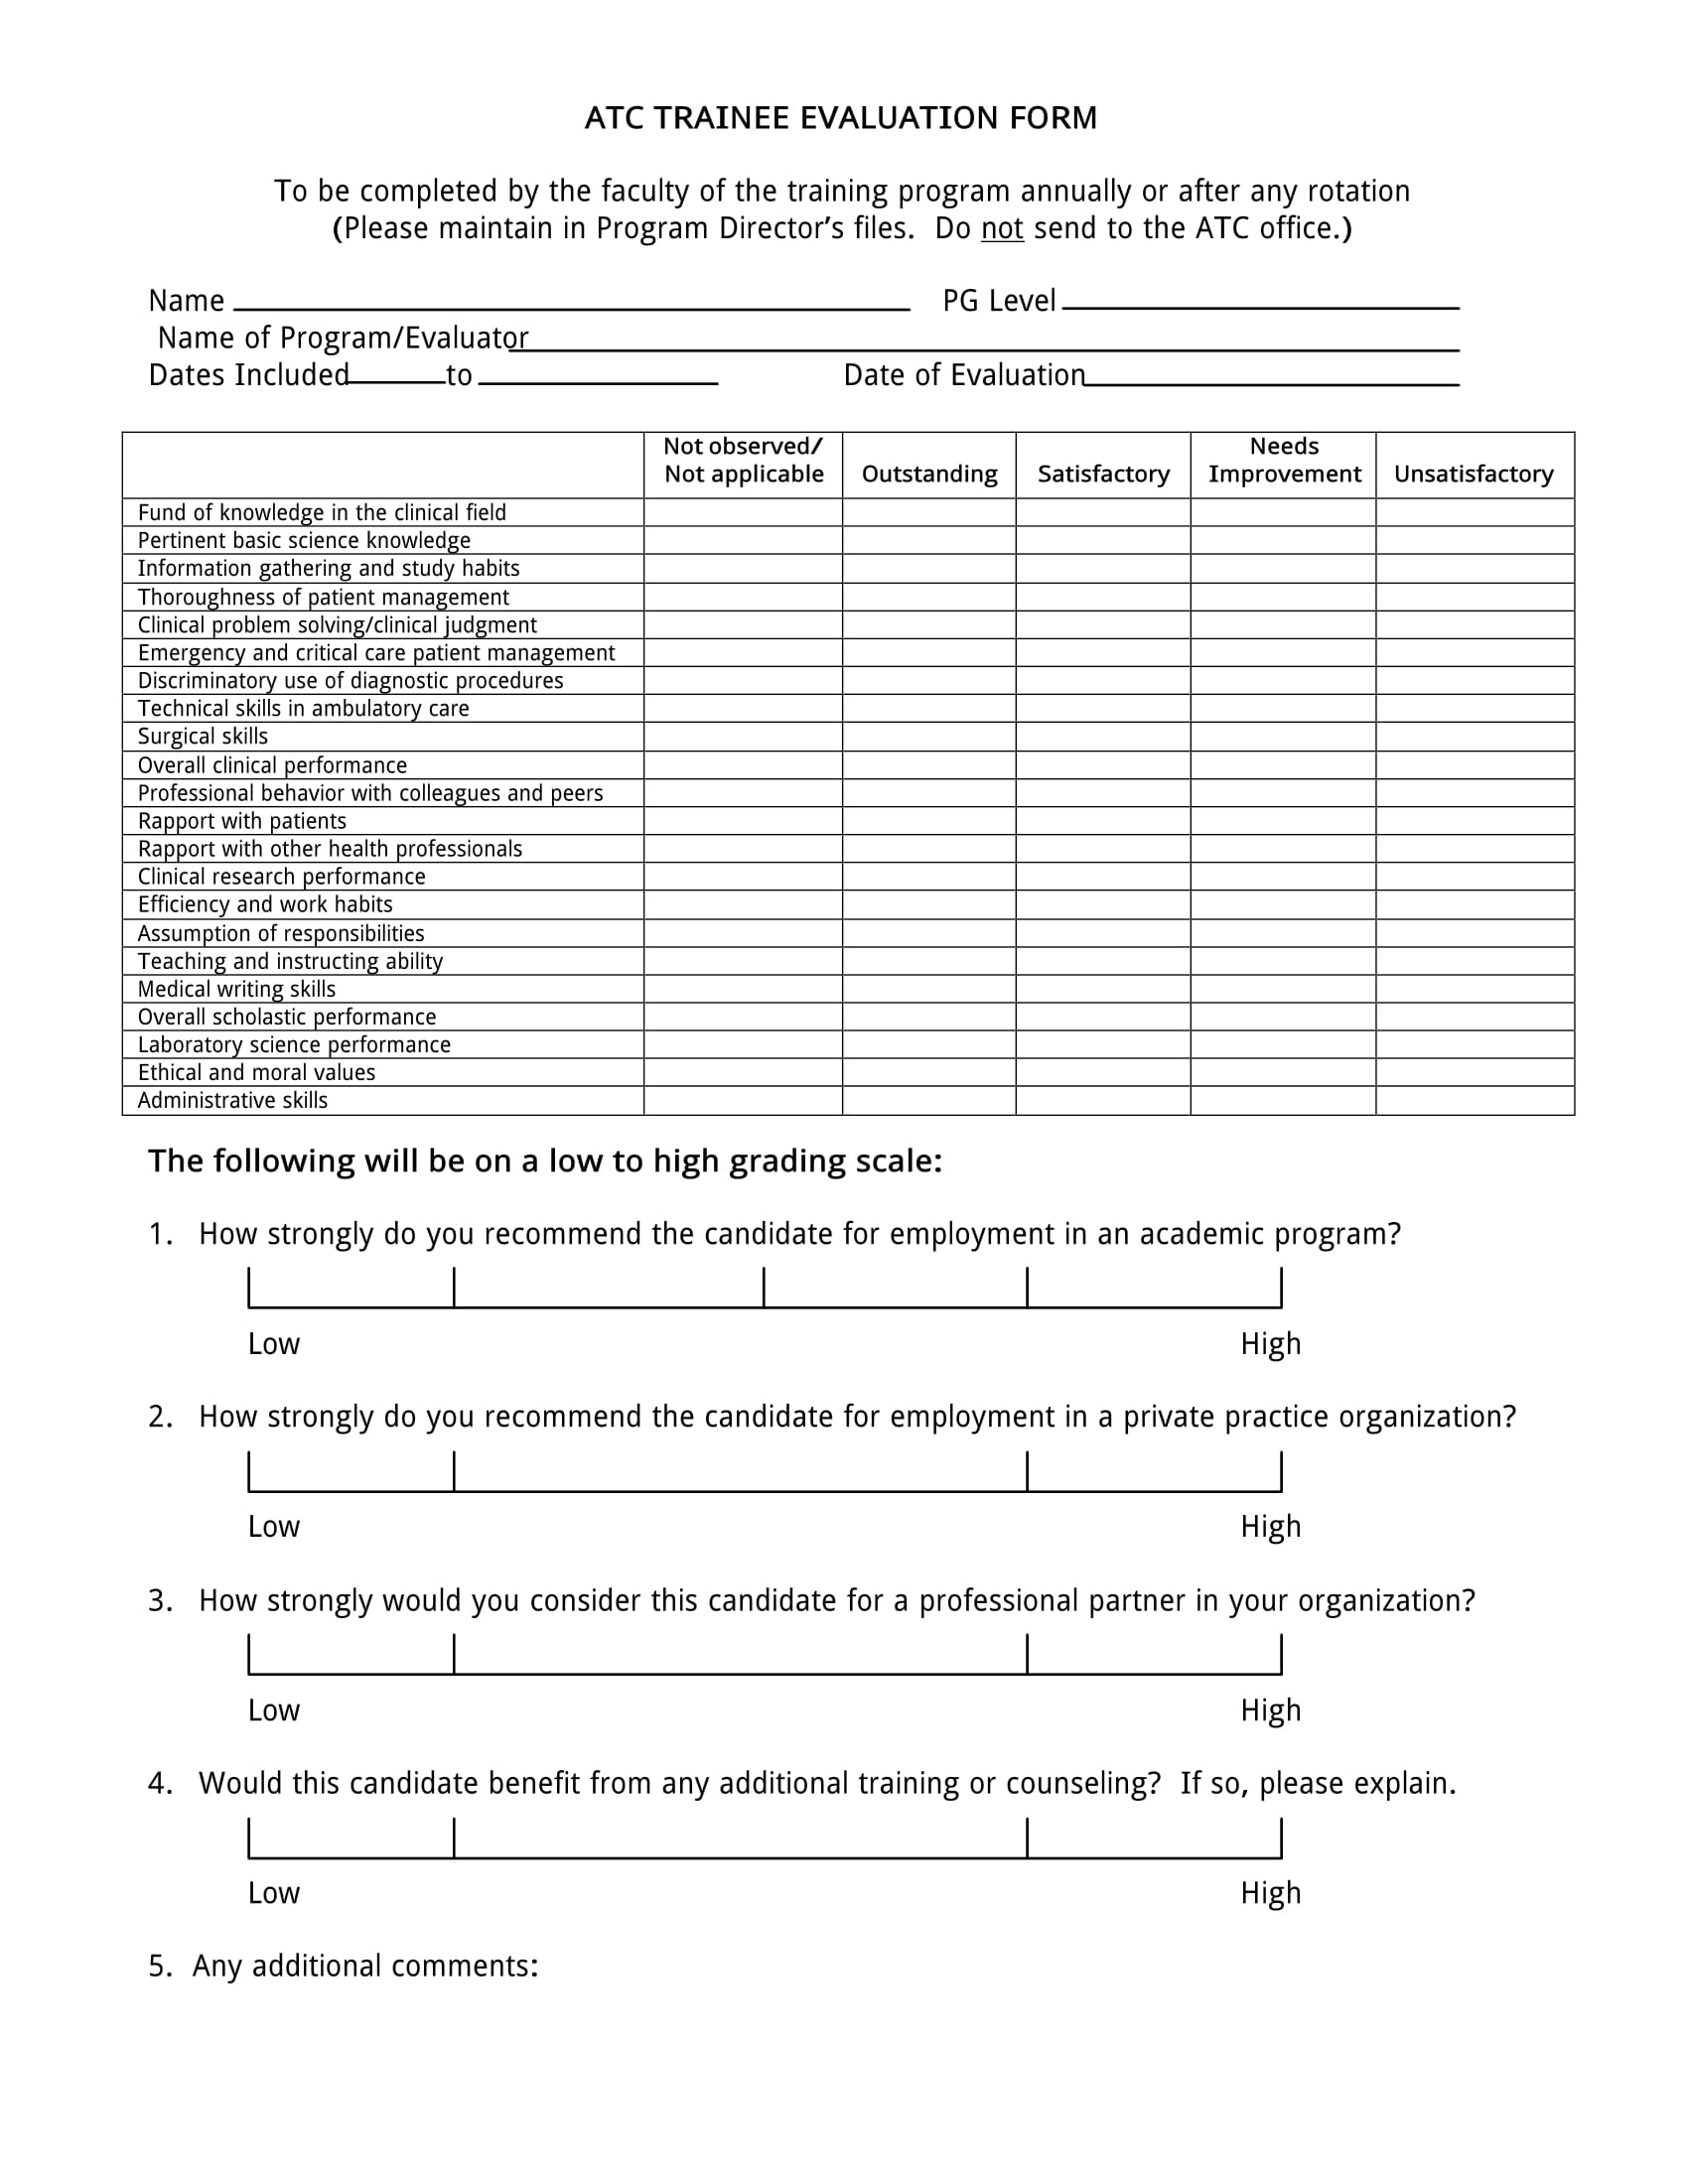 program trainee evaluation form 1